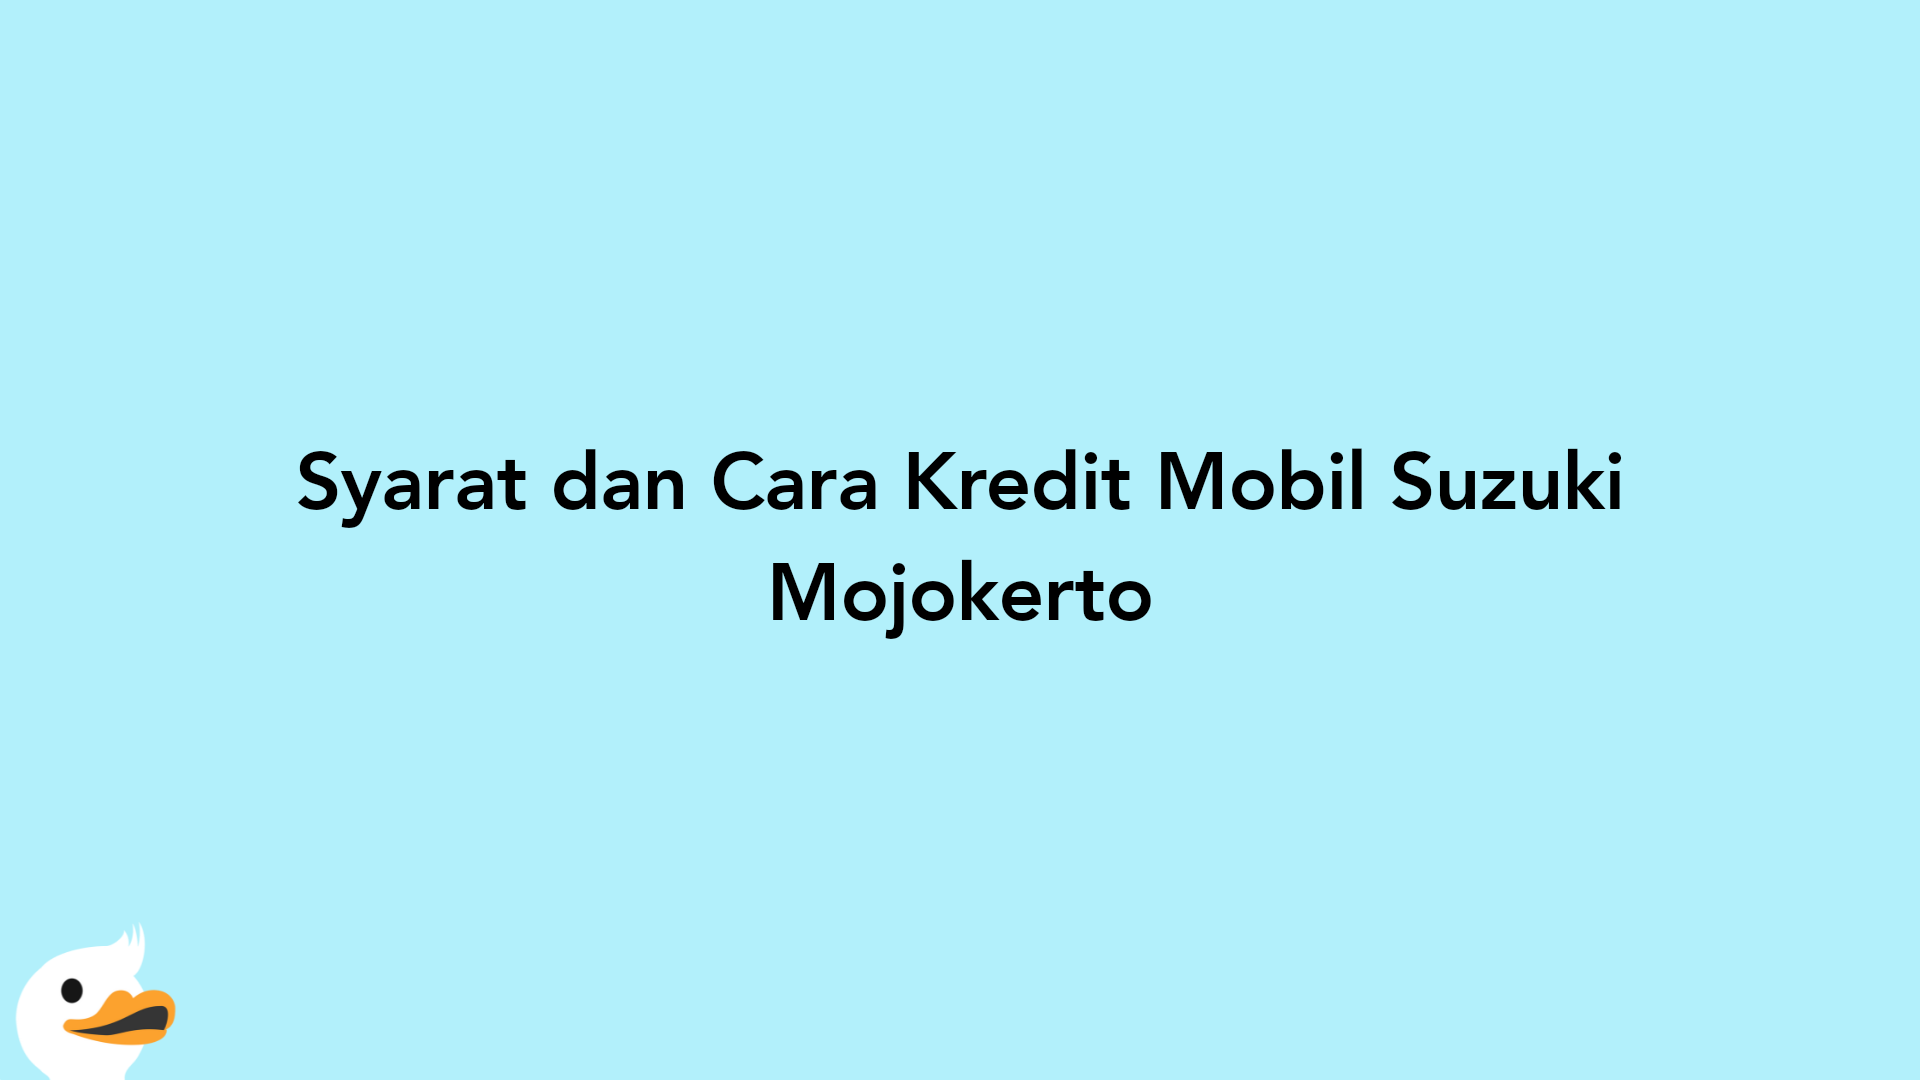 Syarat dan Cara Kredit Mobil Suzuki Mojokerto